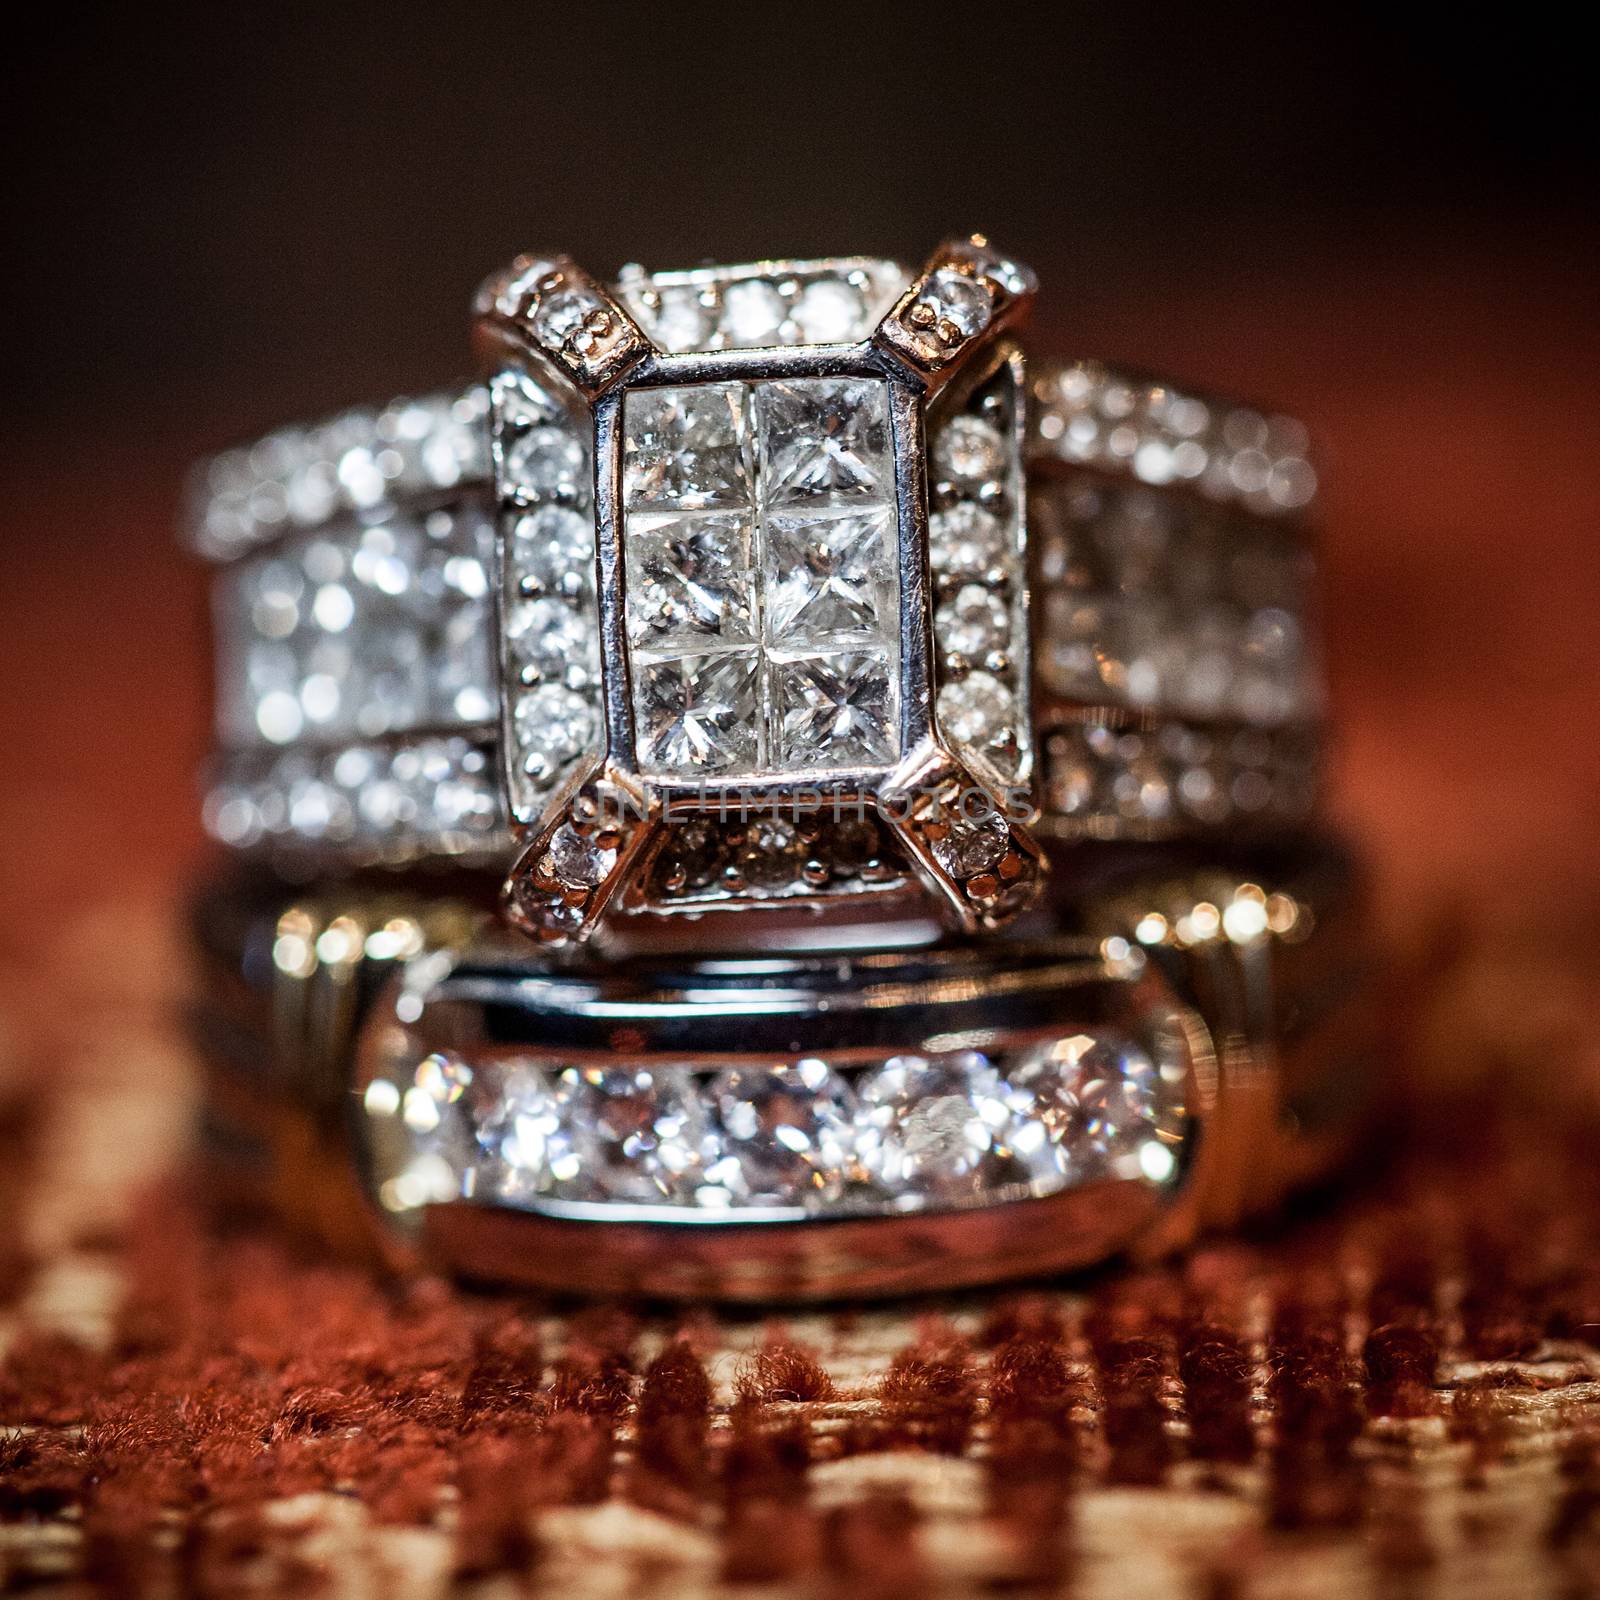 Close Up of Diamond Wedding Ring by salejandro